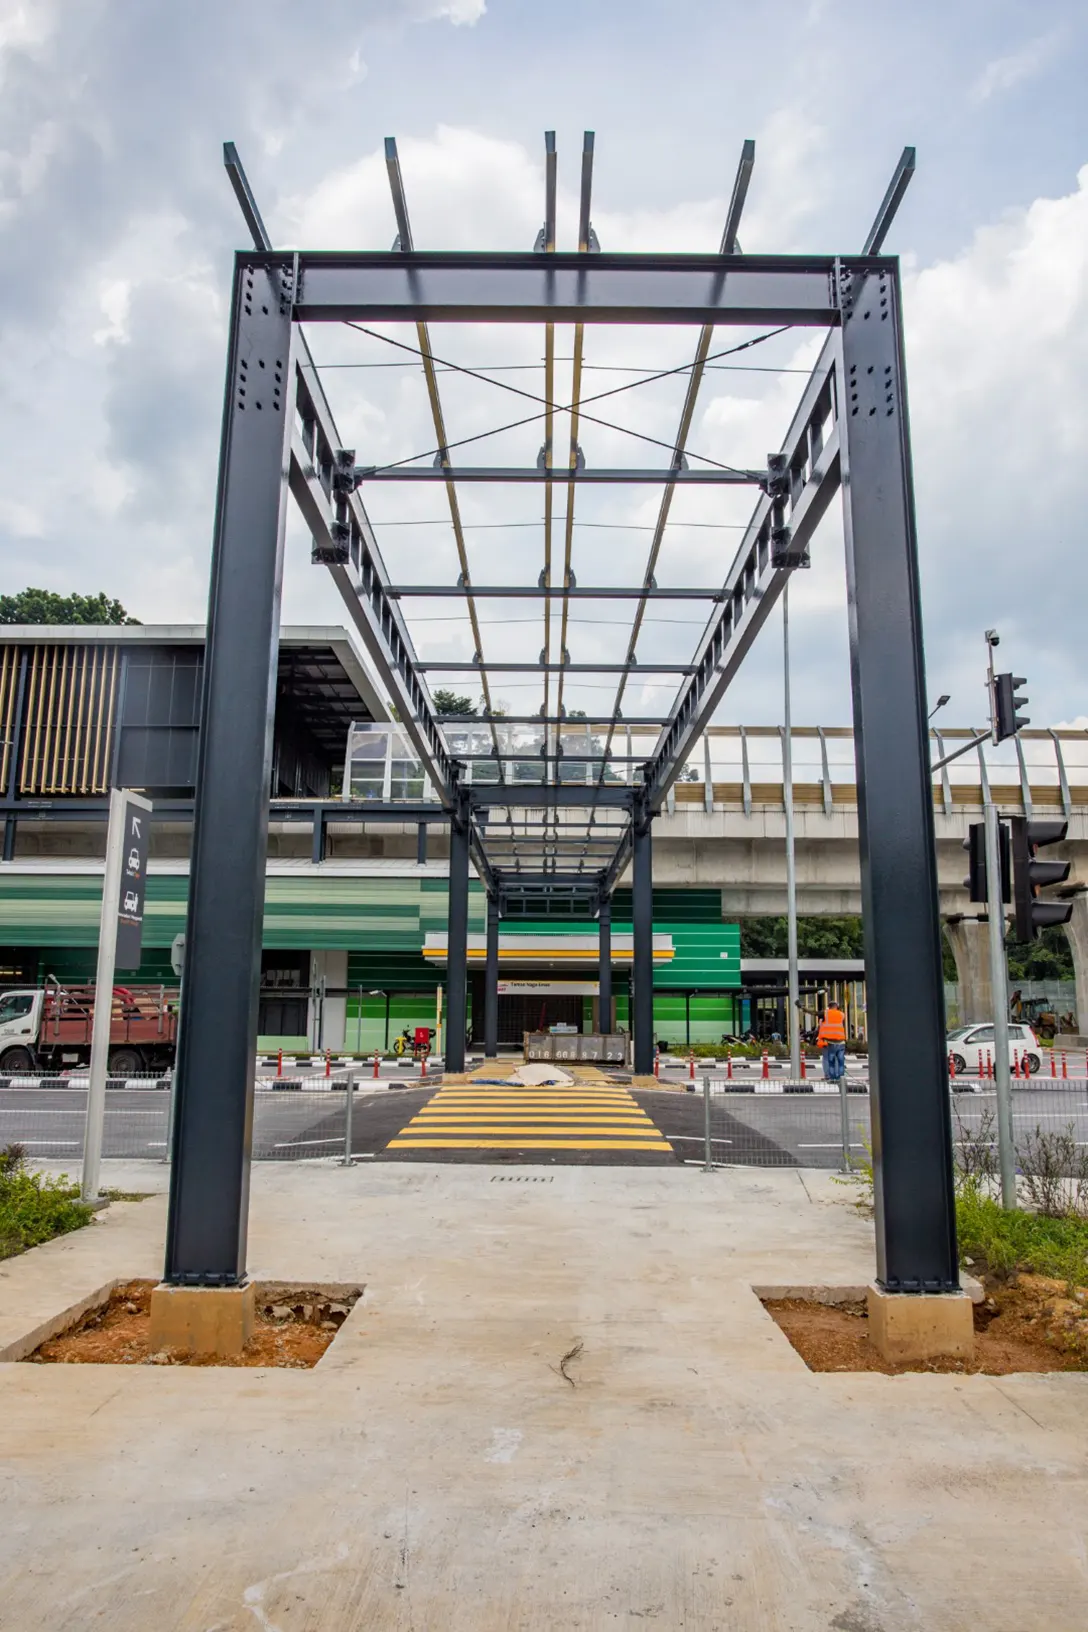 Additional pedestrian high level crossing in progress at the Taman Naga Emas MRT Station.